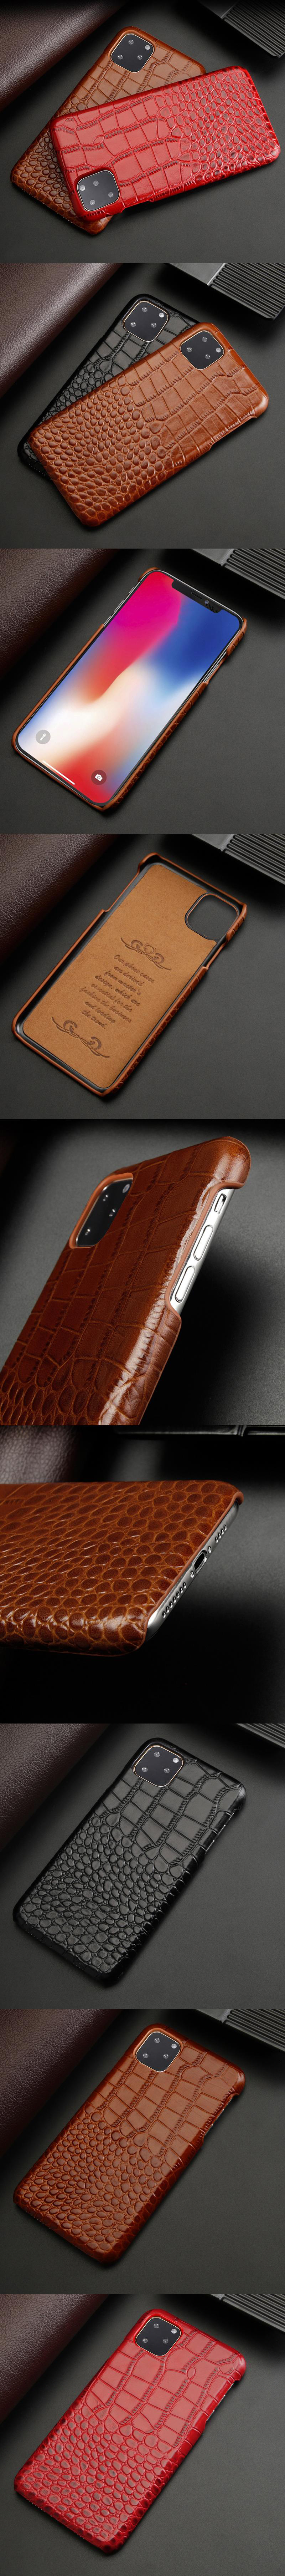 599-Apple-牛皮真皮鱷魚紋蜥蜴紋混搭鱷魚紋造型手機殼背蓋